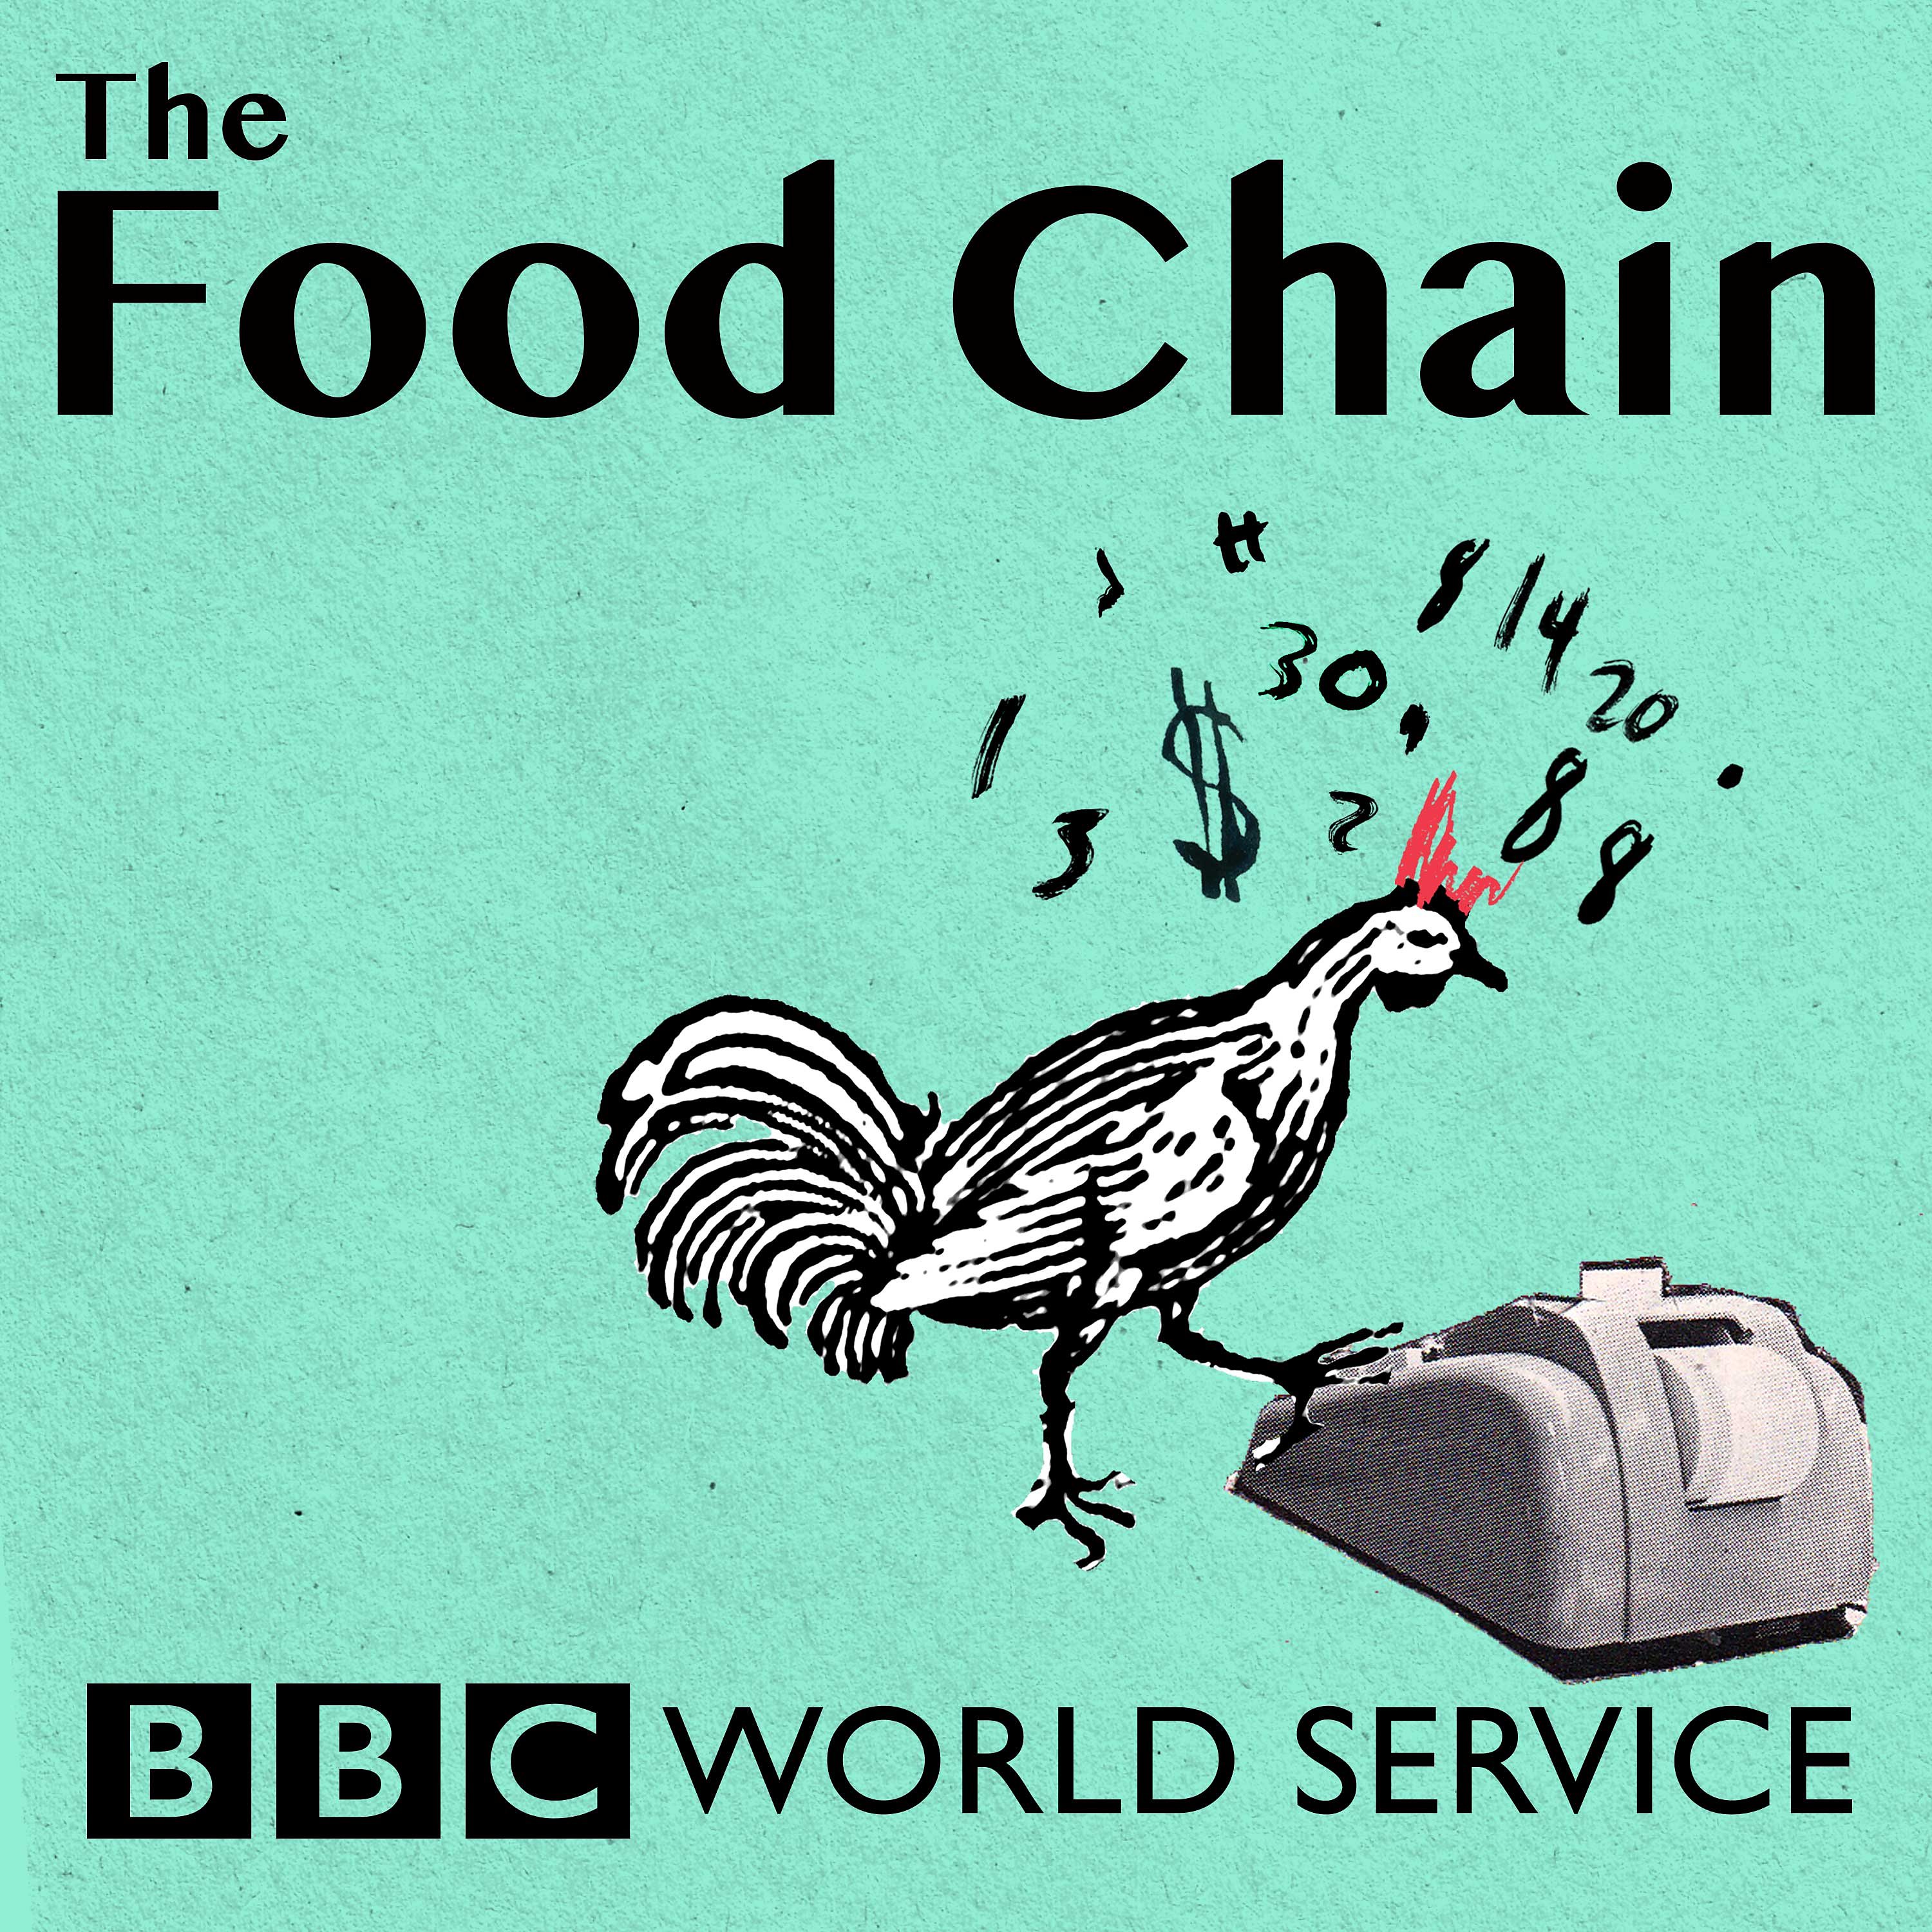 Untold food stories: Rohingya and Uighur cuisine